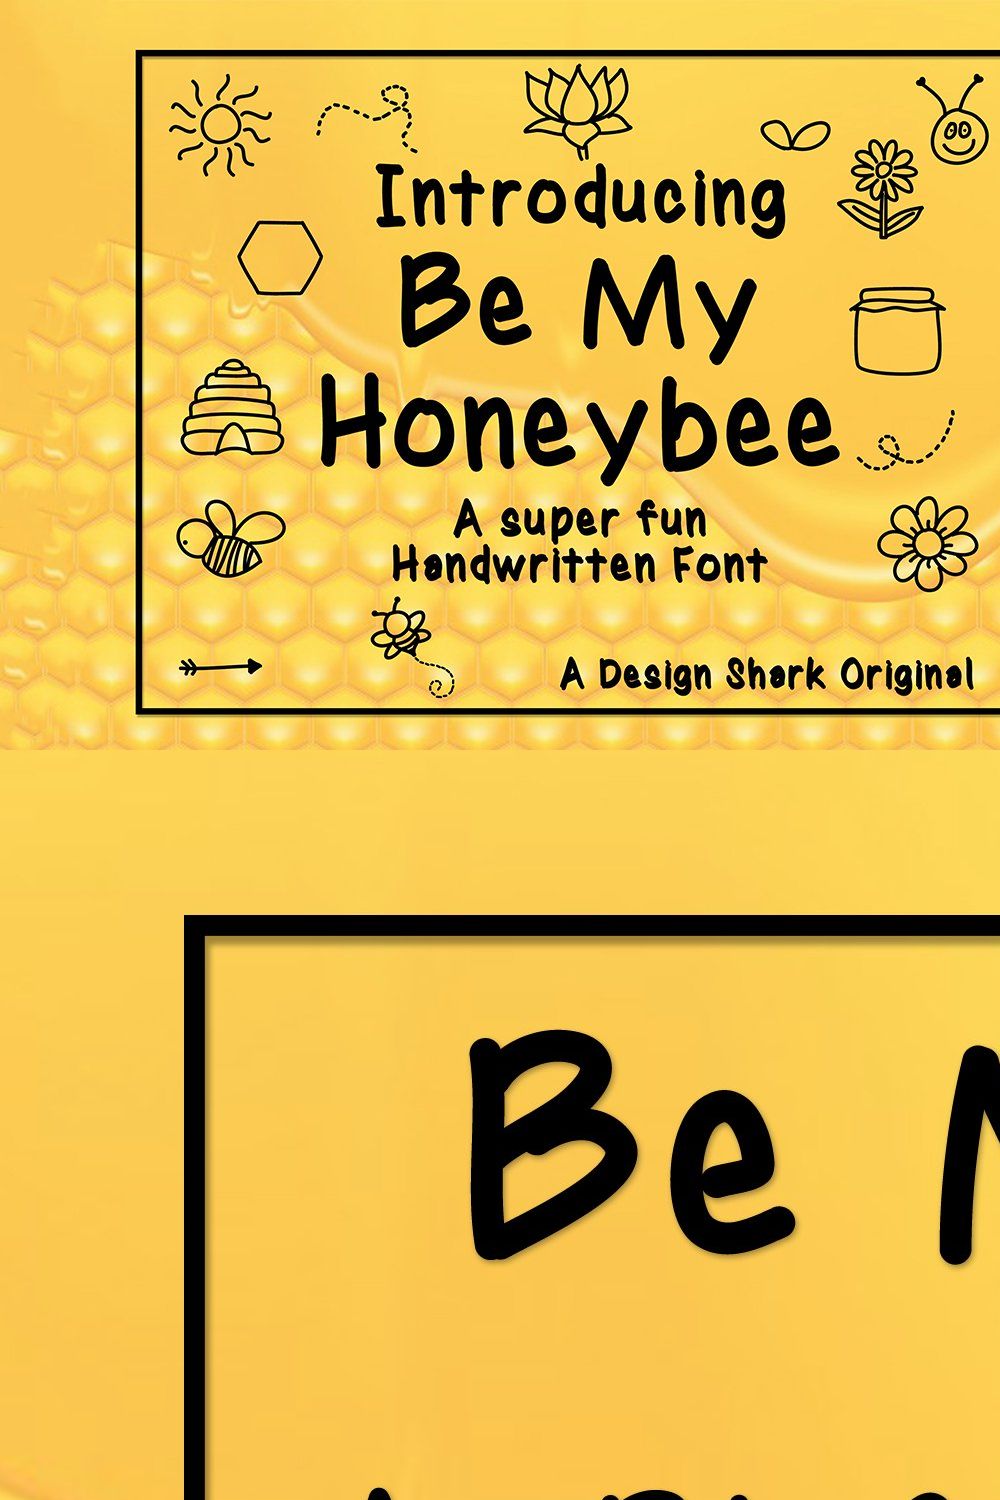 Be My Honeybee pinterest preview image.